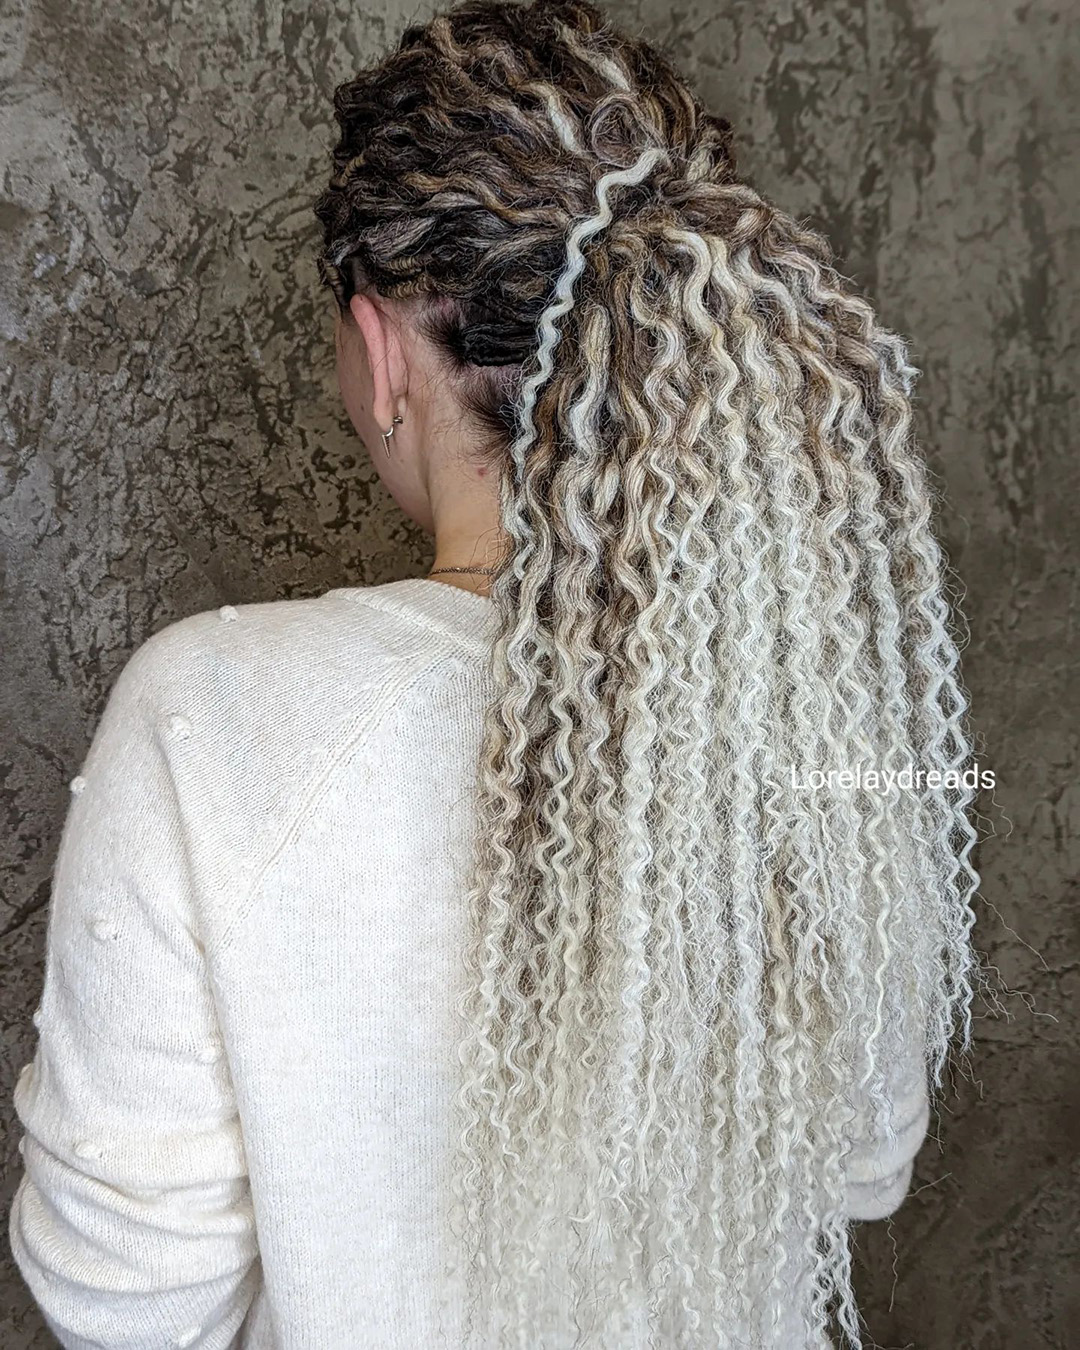 wedding hairstyles for dreadlocks wavy in ponytail lorelaydreads